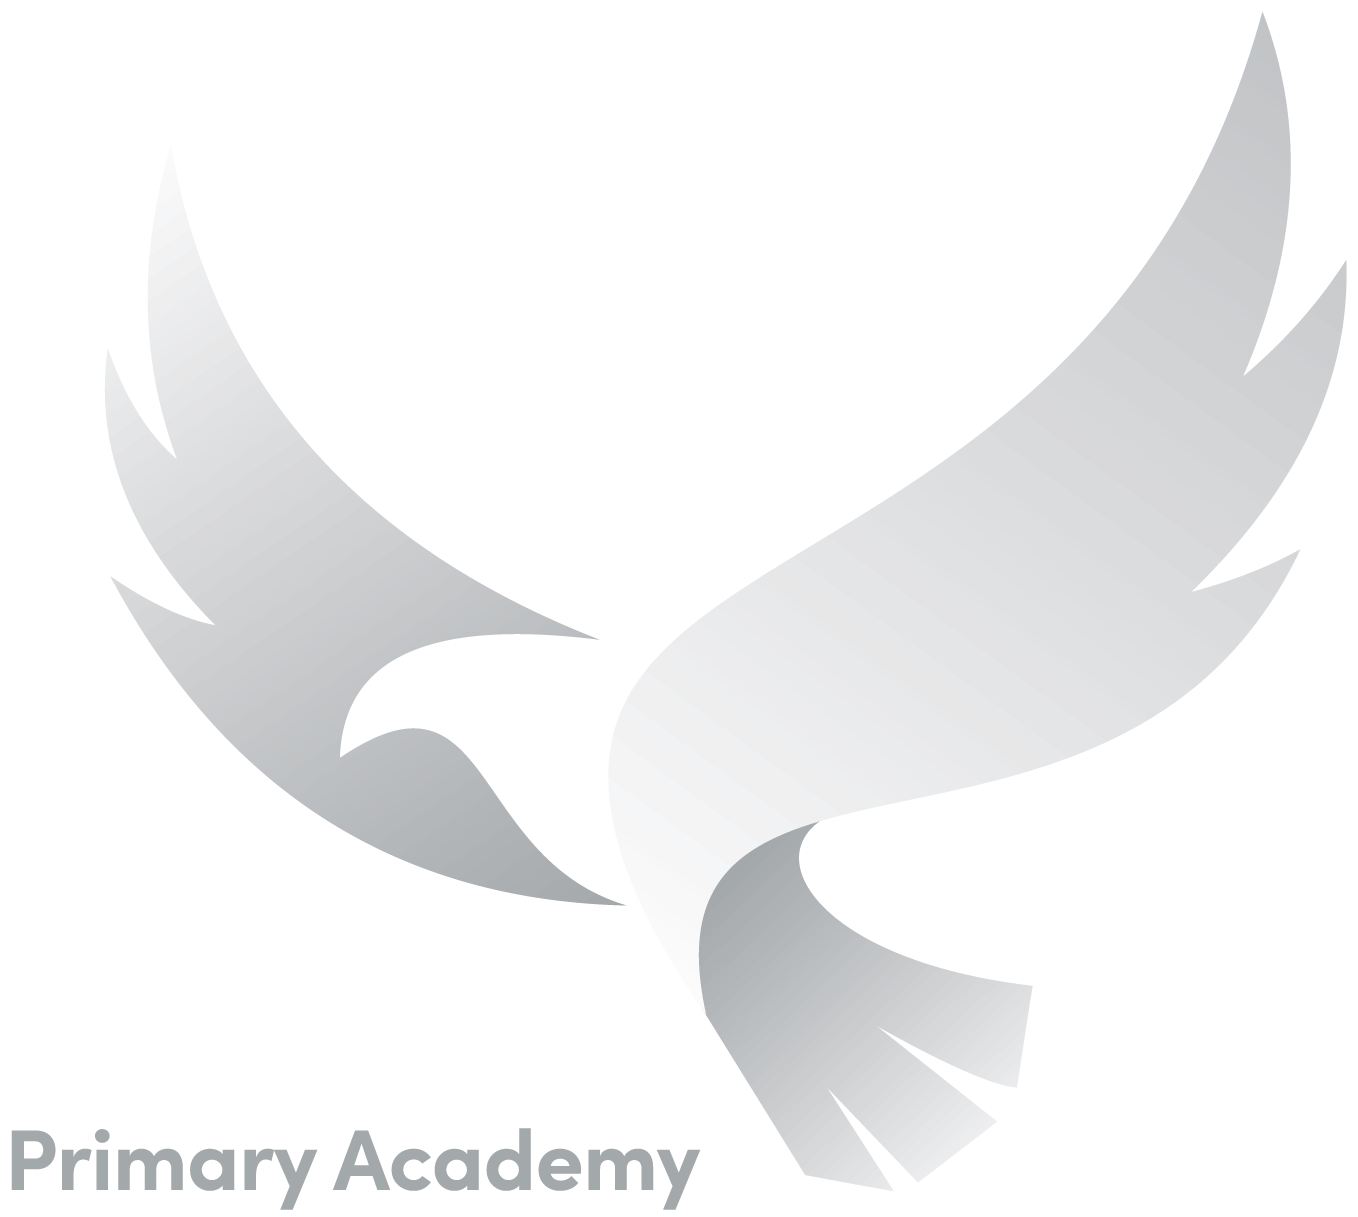 Harrier Primary Academy